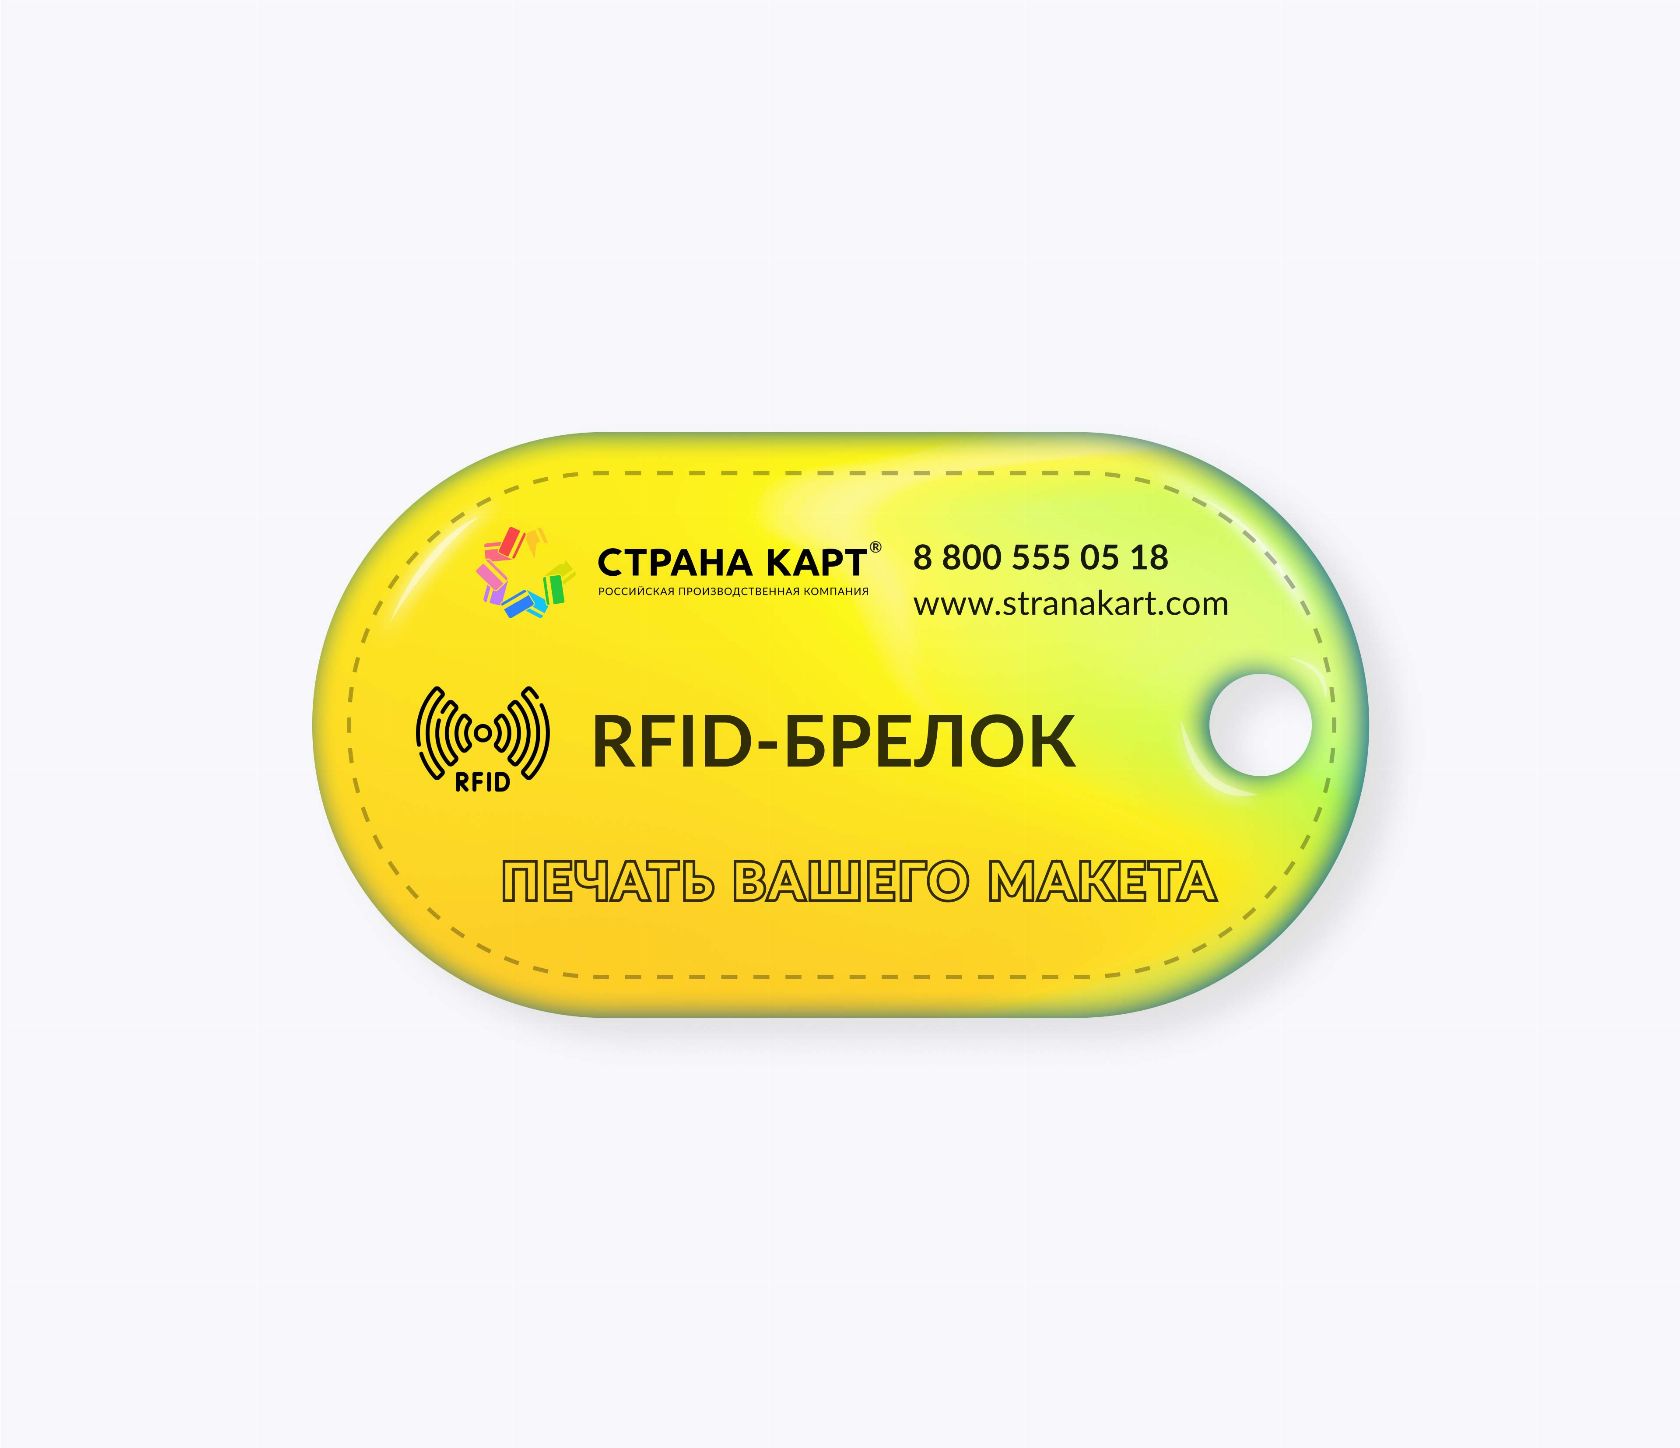 Овальные RFID-брелоки NEOKEY® с чипом NXP MIFARE Ultralight EV1 7 byte UID RFID-брелоки NEOKEY® с чипом NXP MIFARE Ultralight EV1 7 byte UID и вашим логотипом